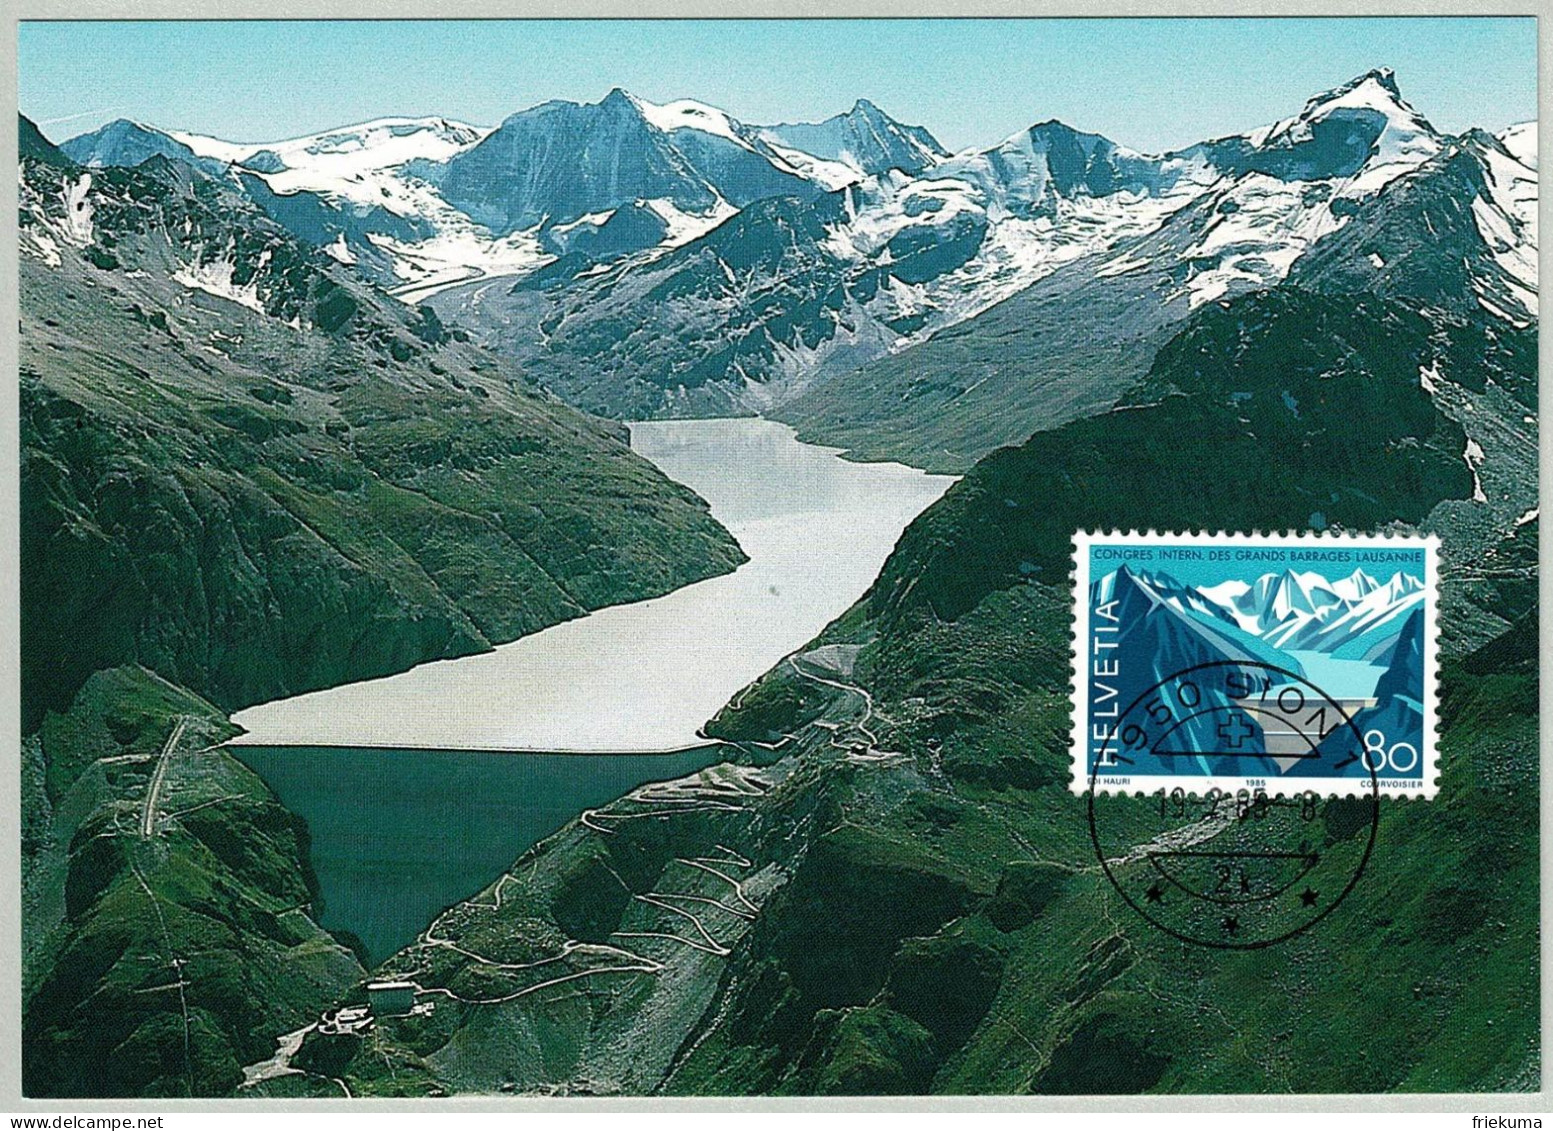 Schweiz / Helvetia 1985, Maximumkarte Kongress Für Talsperren Lausanne, Staumauer Grand-Dixence, Barrage / Dam, Sion - Wasser